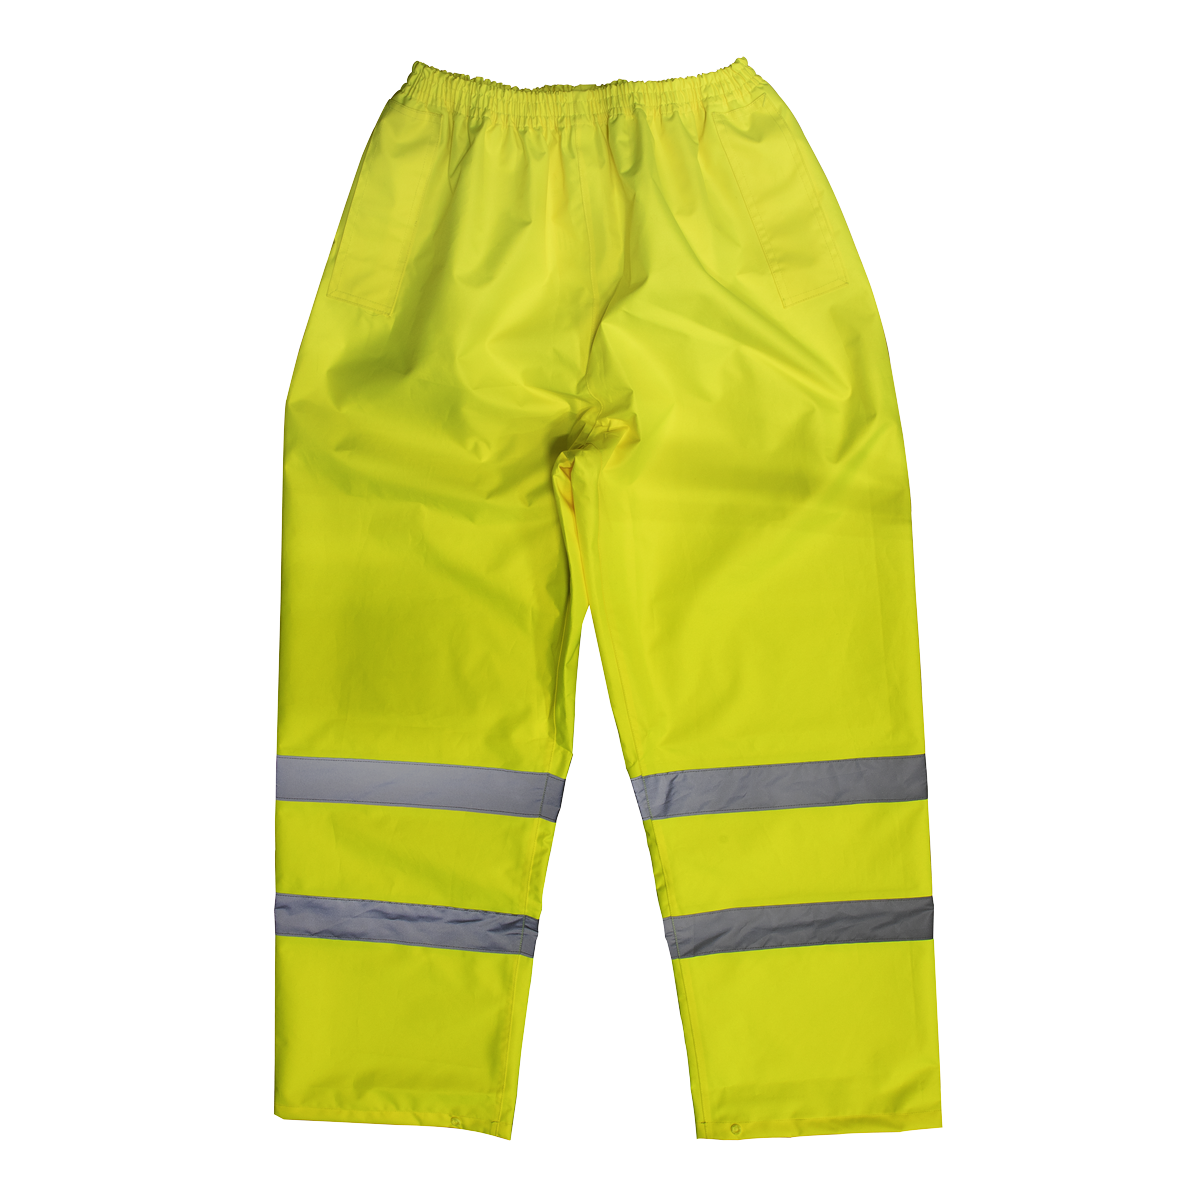 Sealey Hi-Vis Yellow Waterproof Trousers - X-Large 807XL